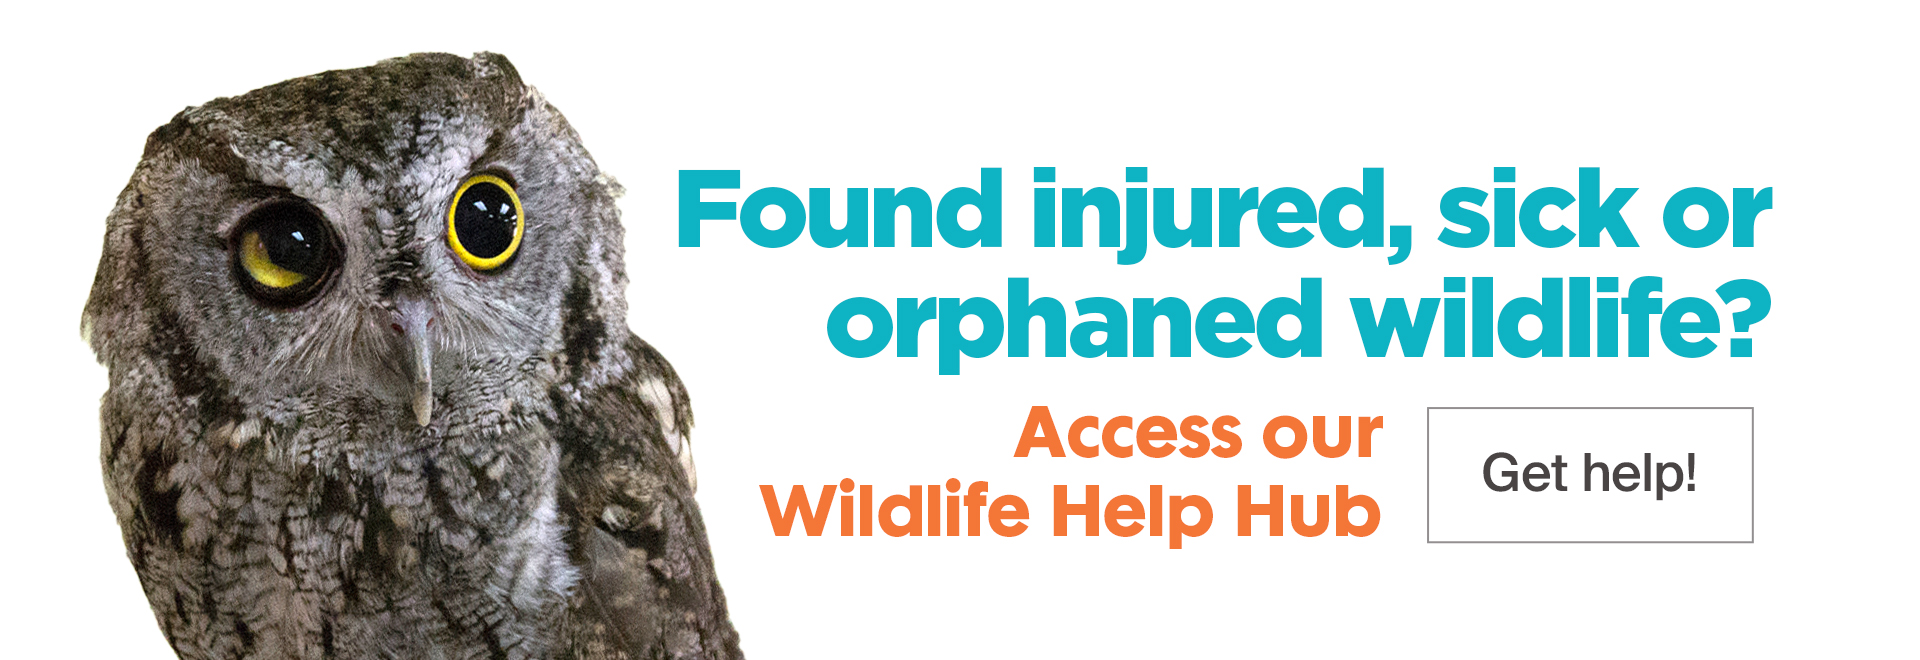 Found injured, sick or orphaned wildlife? Access our Wildlife Help Hub - Get Help!